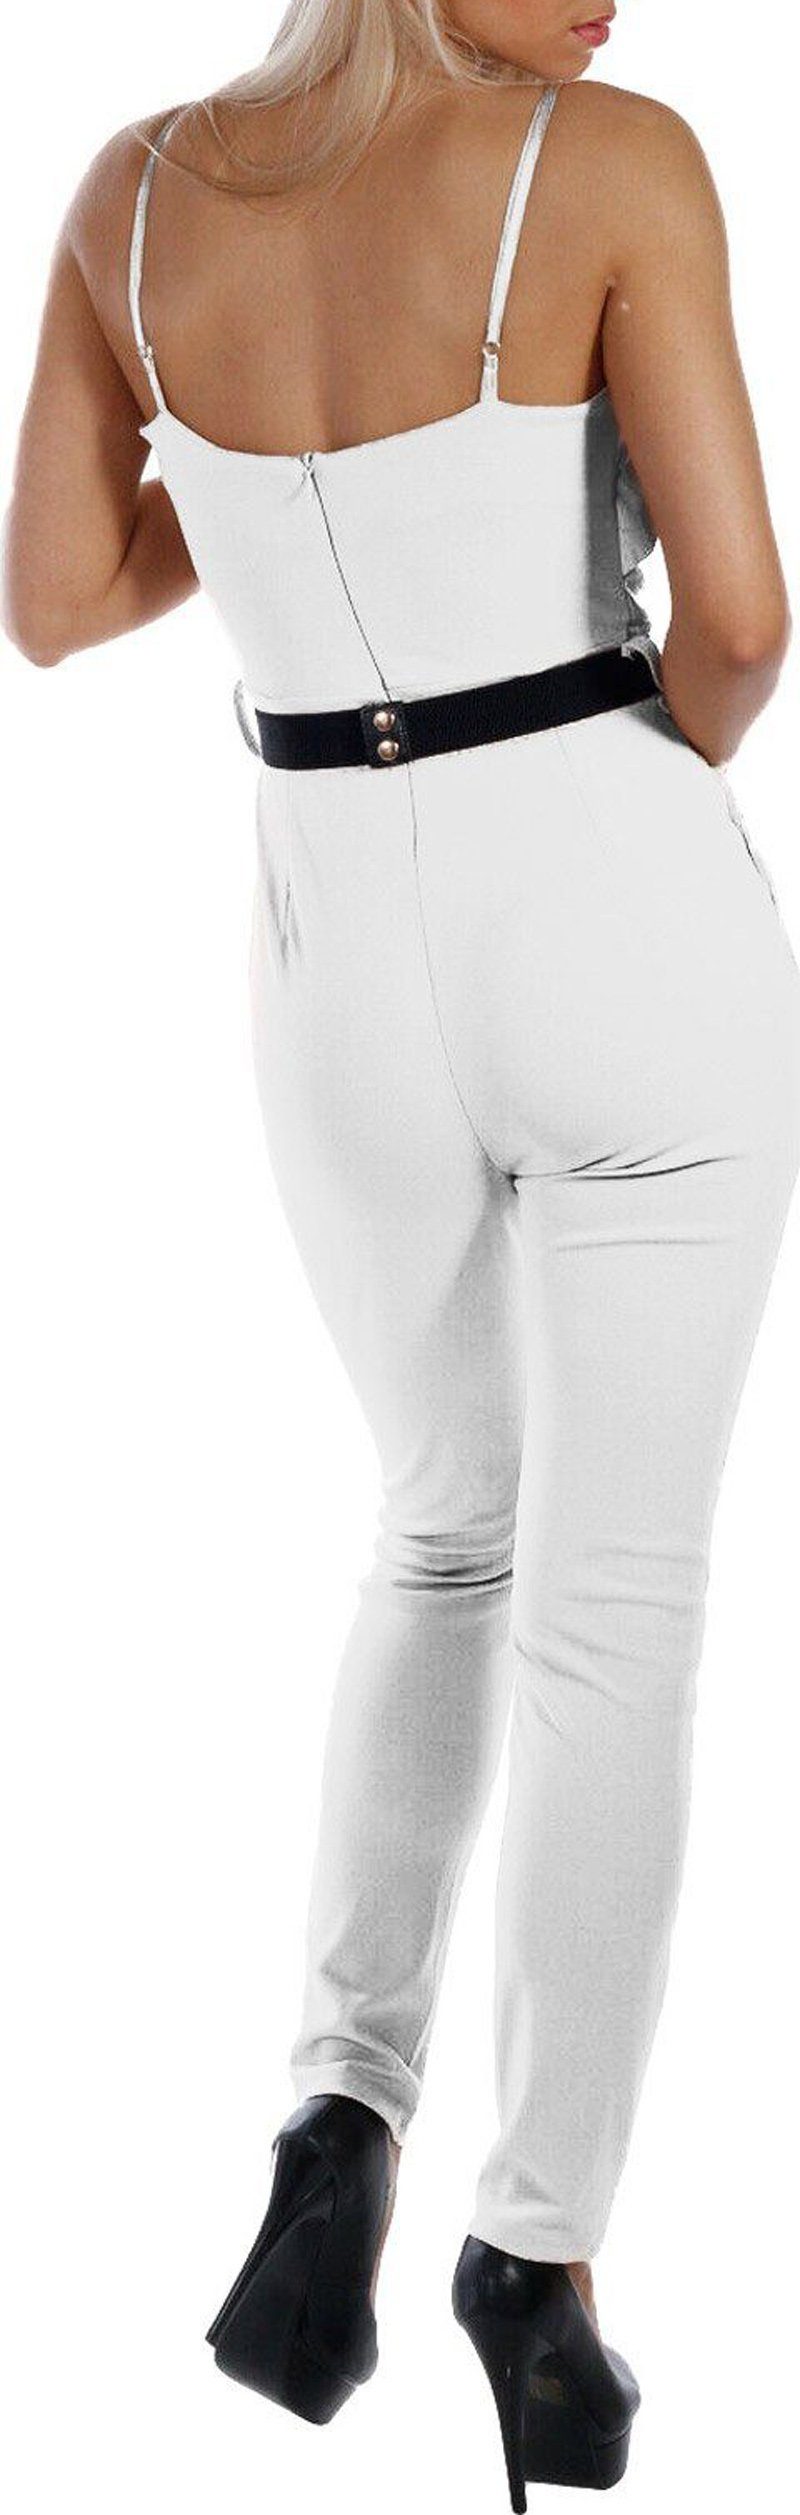 Charis Moda Jumpsuit Overall lang verstellbaren unifarben Weiß Spaghettiträgern mit